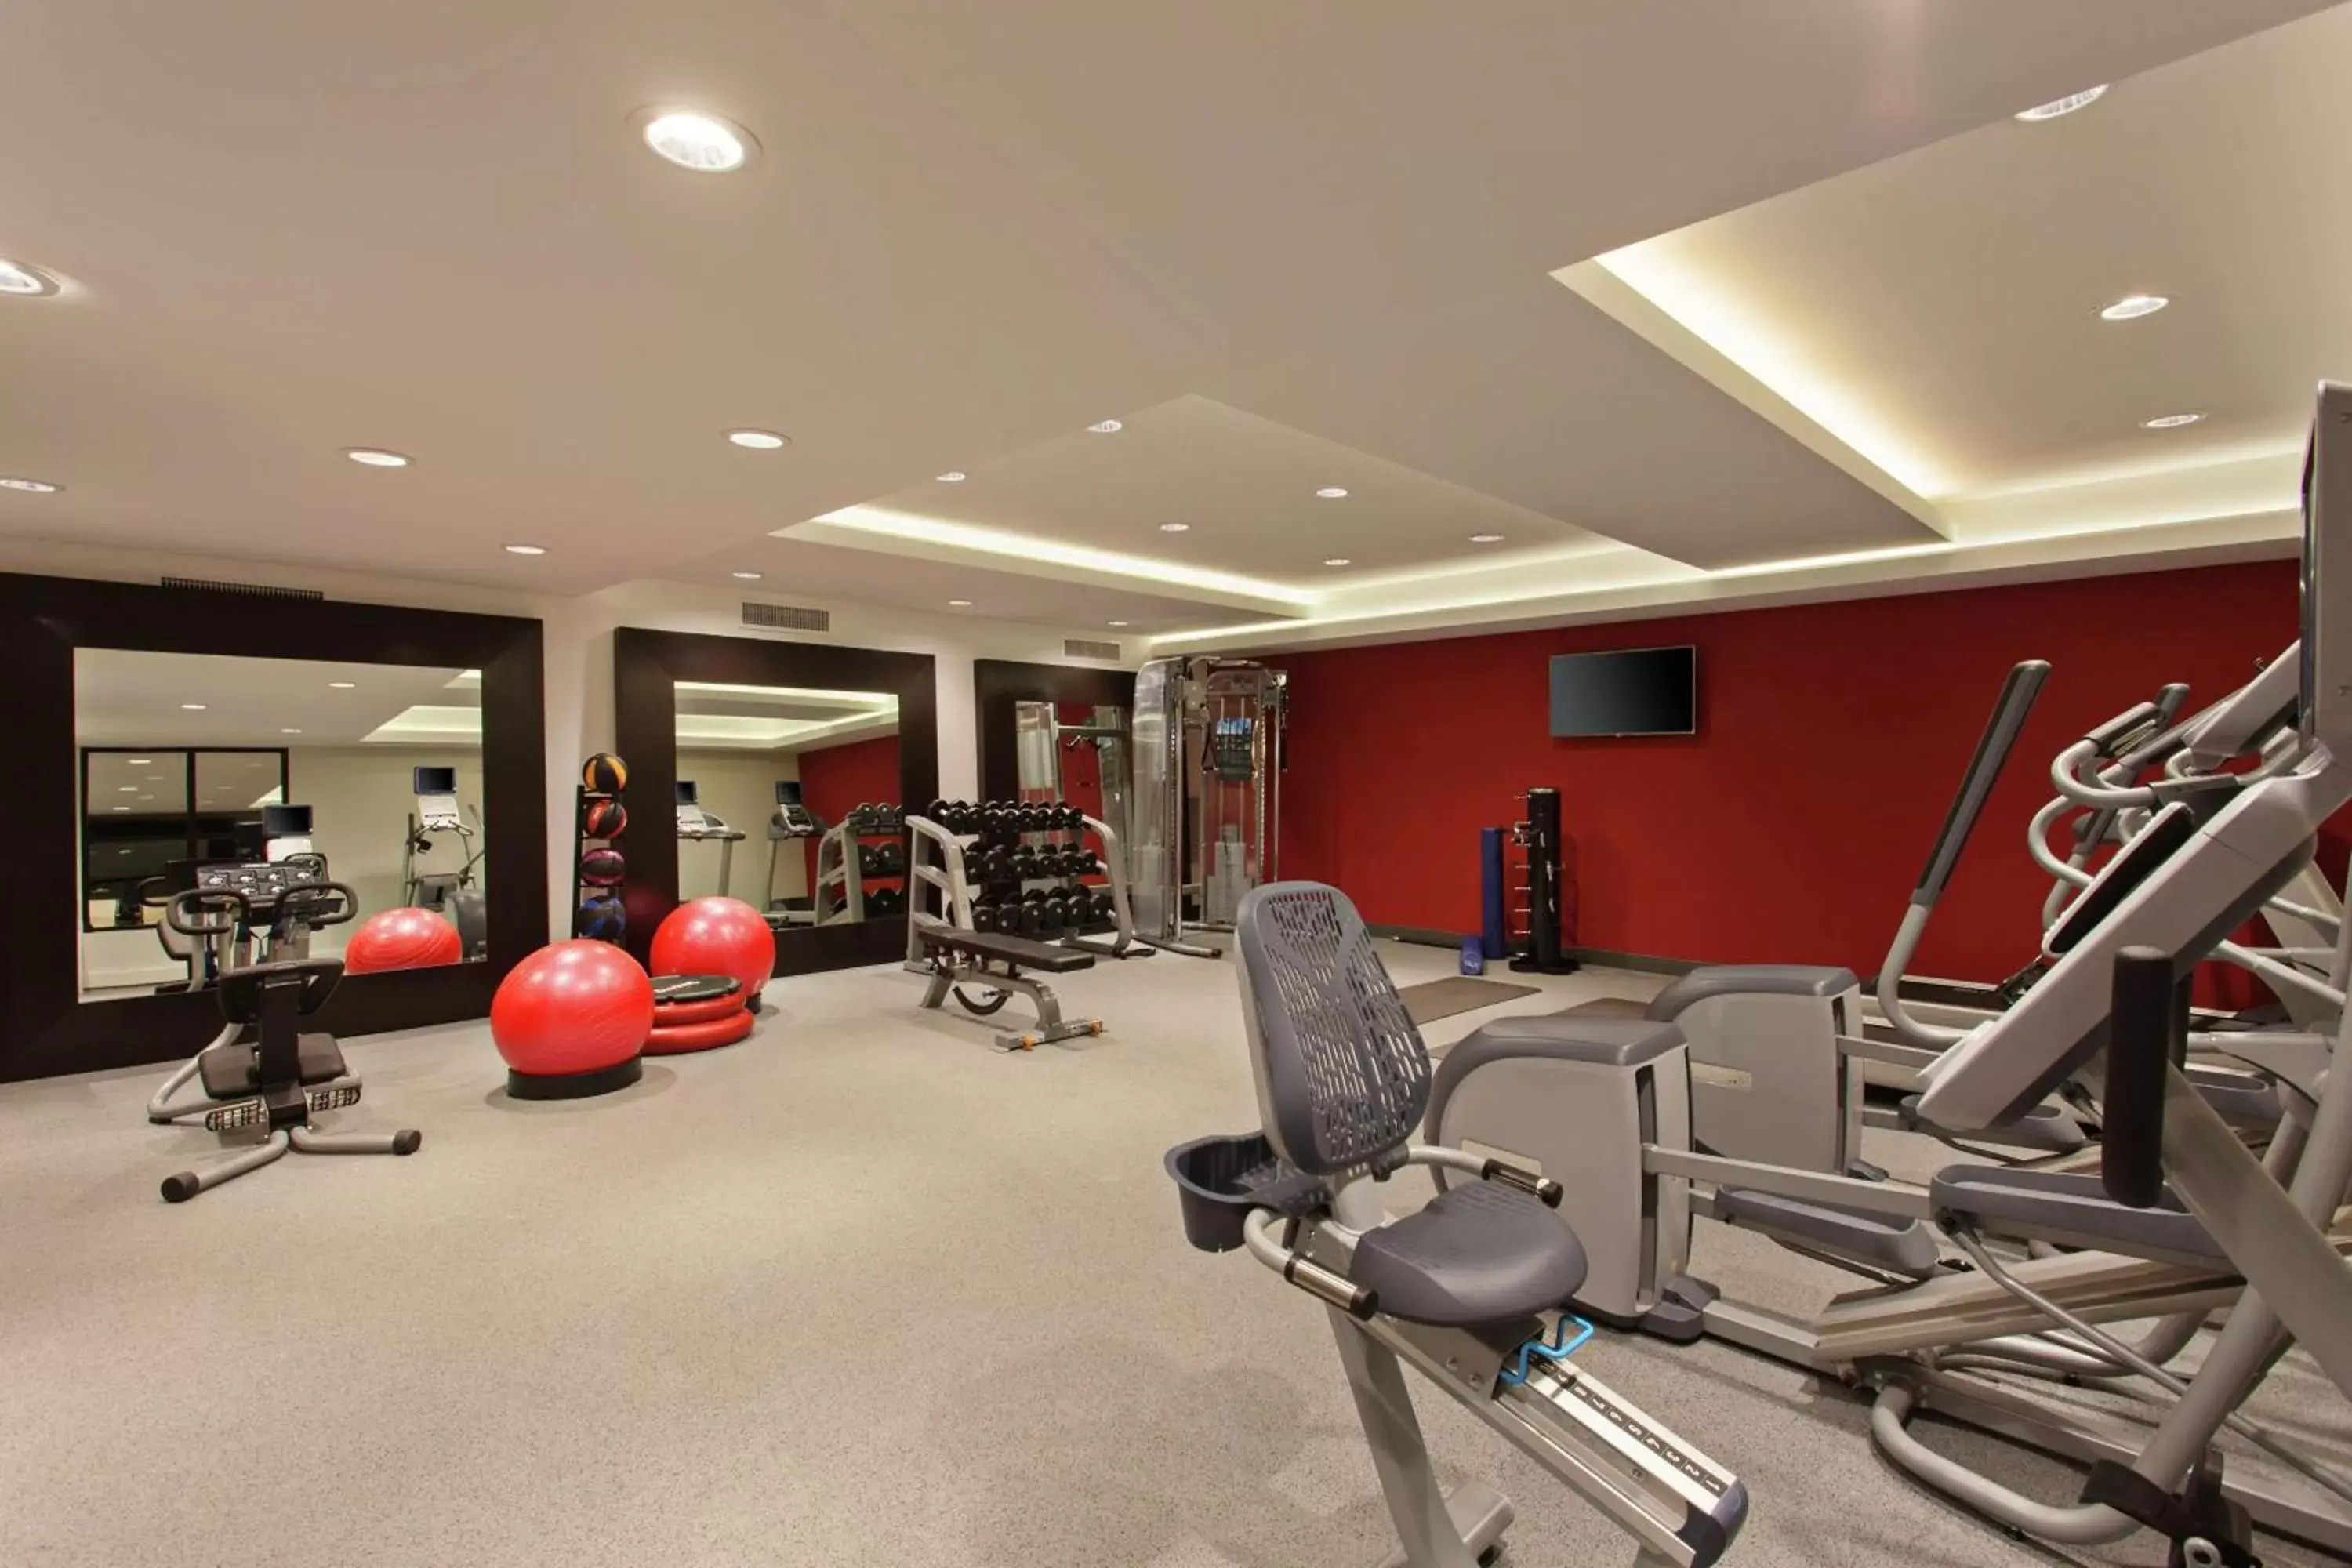 Fitness centre/facilities, Fitness Center/Facilities in Hilton Garden Inn Irvine/Orange County Airport